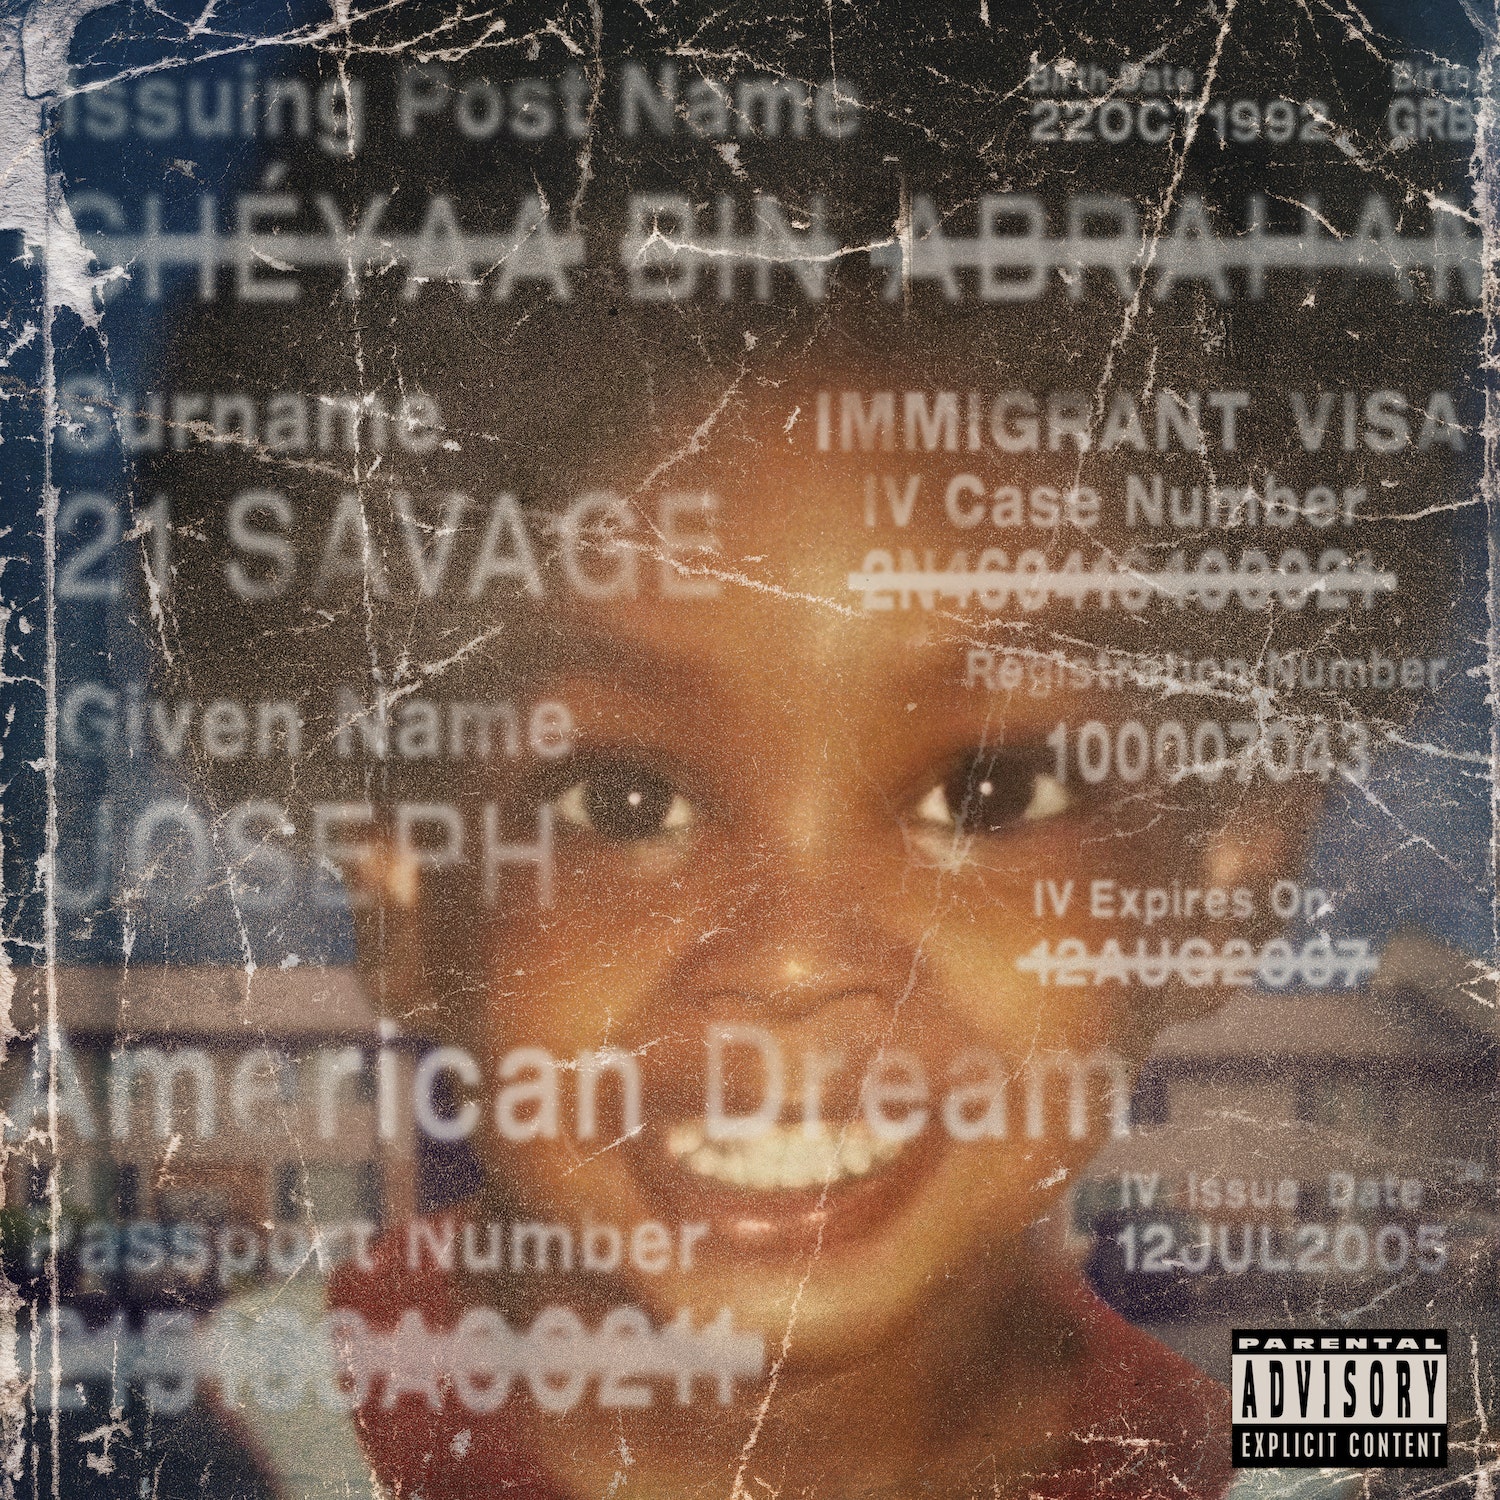 21 Savage Releasing New Album American Dream on Friday | Pitchfork